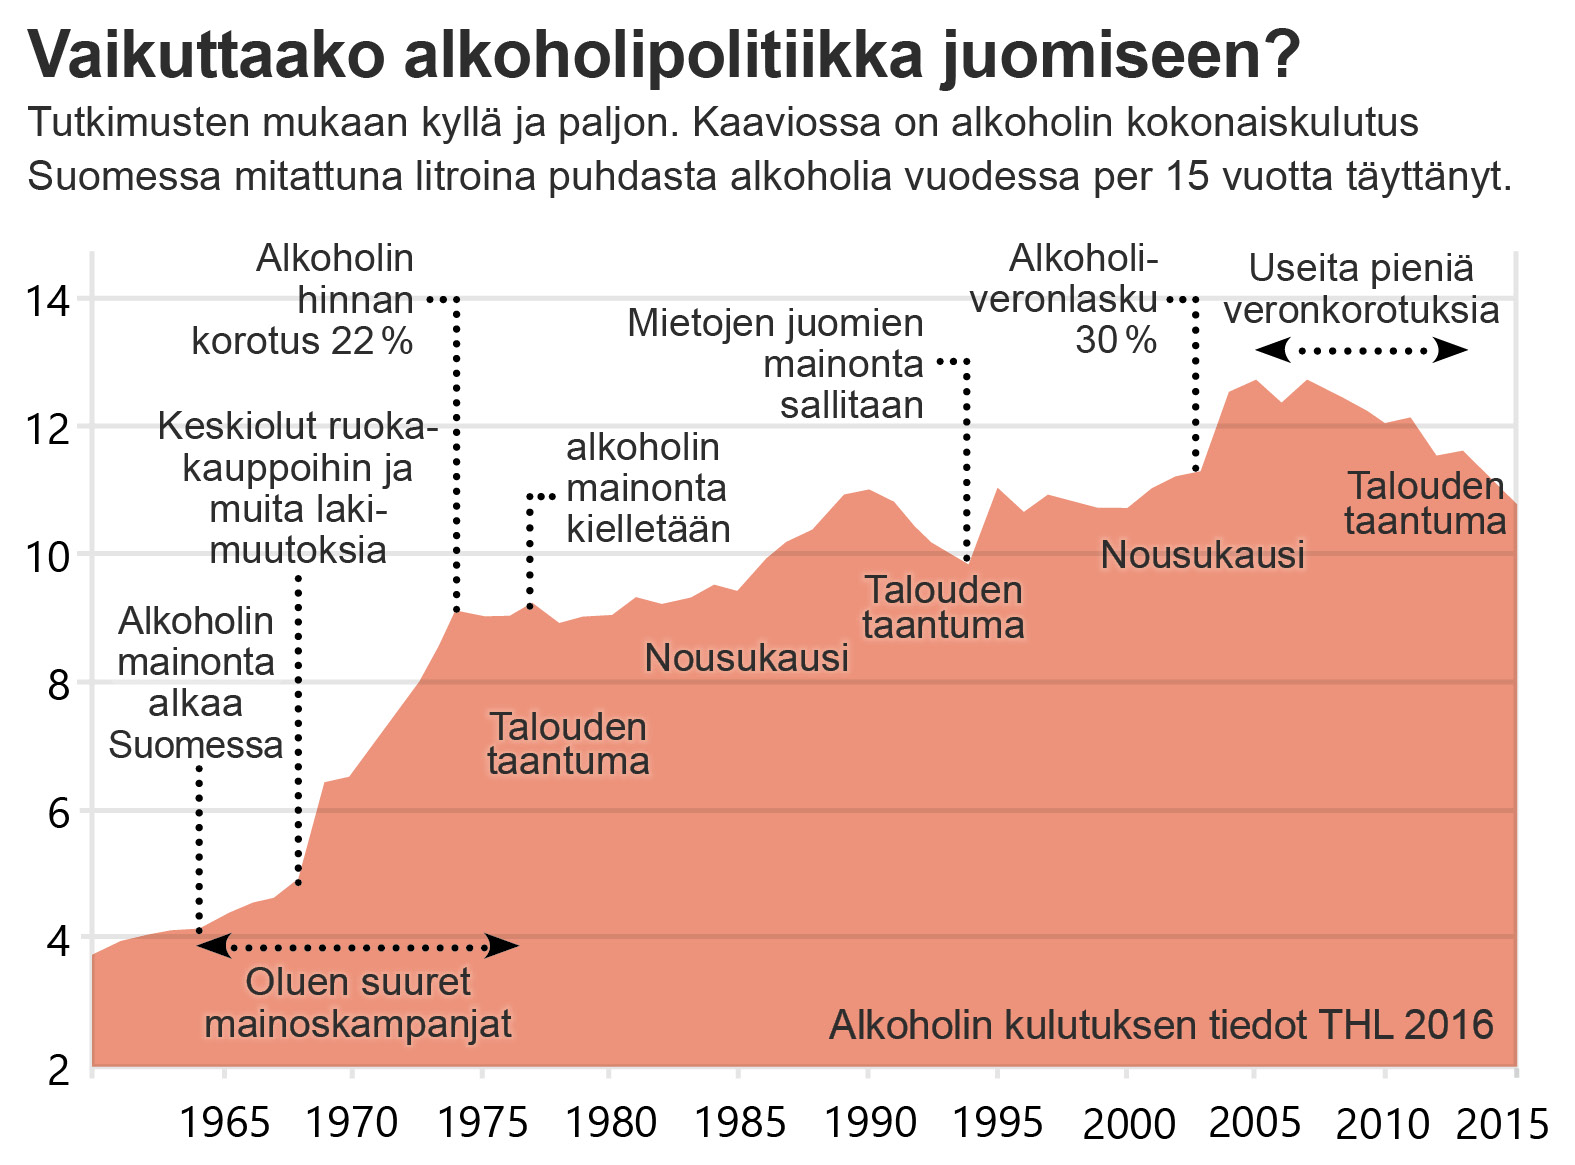 Suomen alkoholihistoria 1960-2015